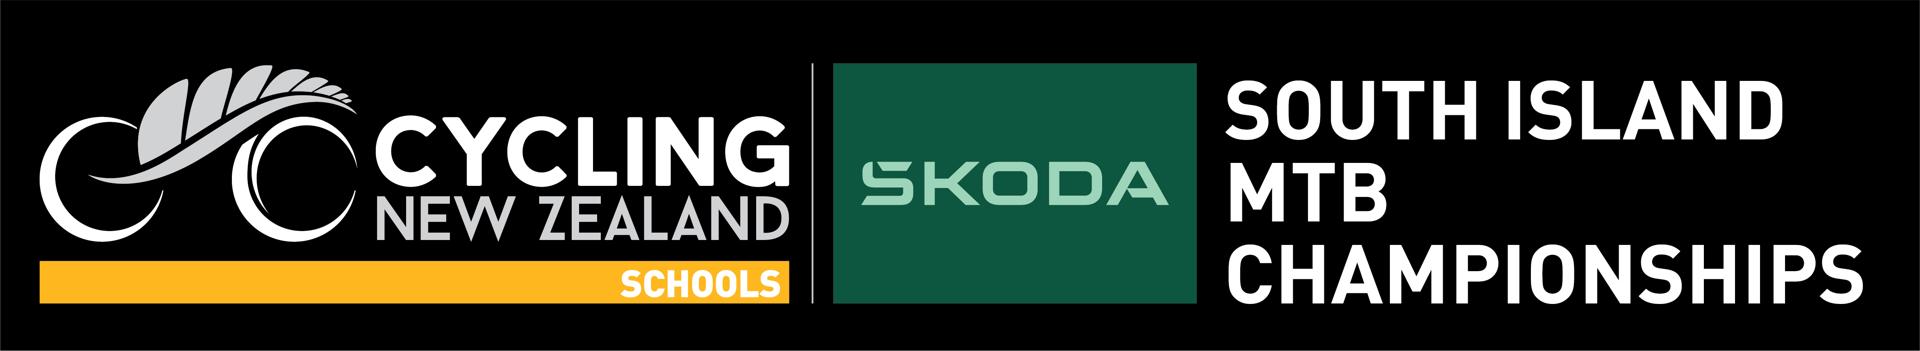 Skoda South Island School MTB Champs - Cross Country Logo